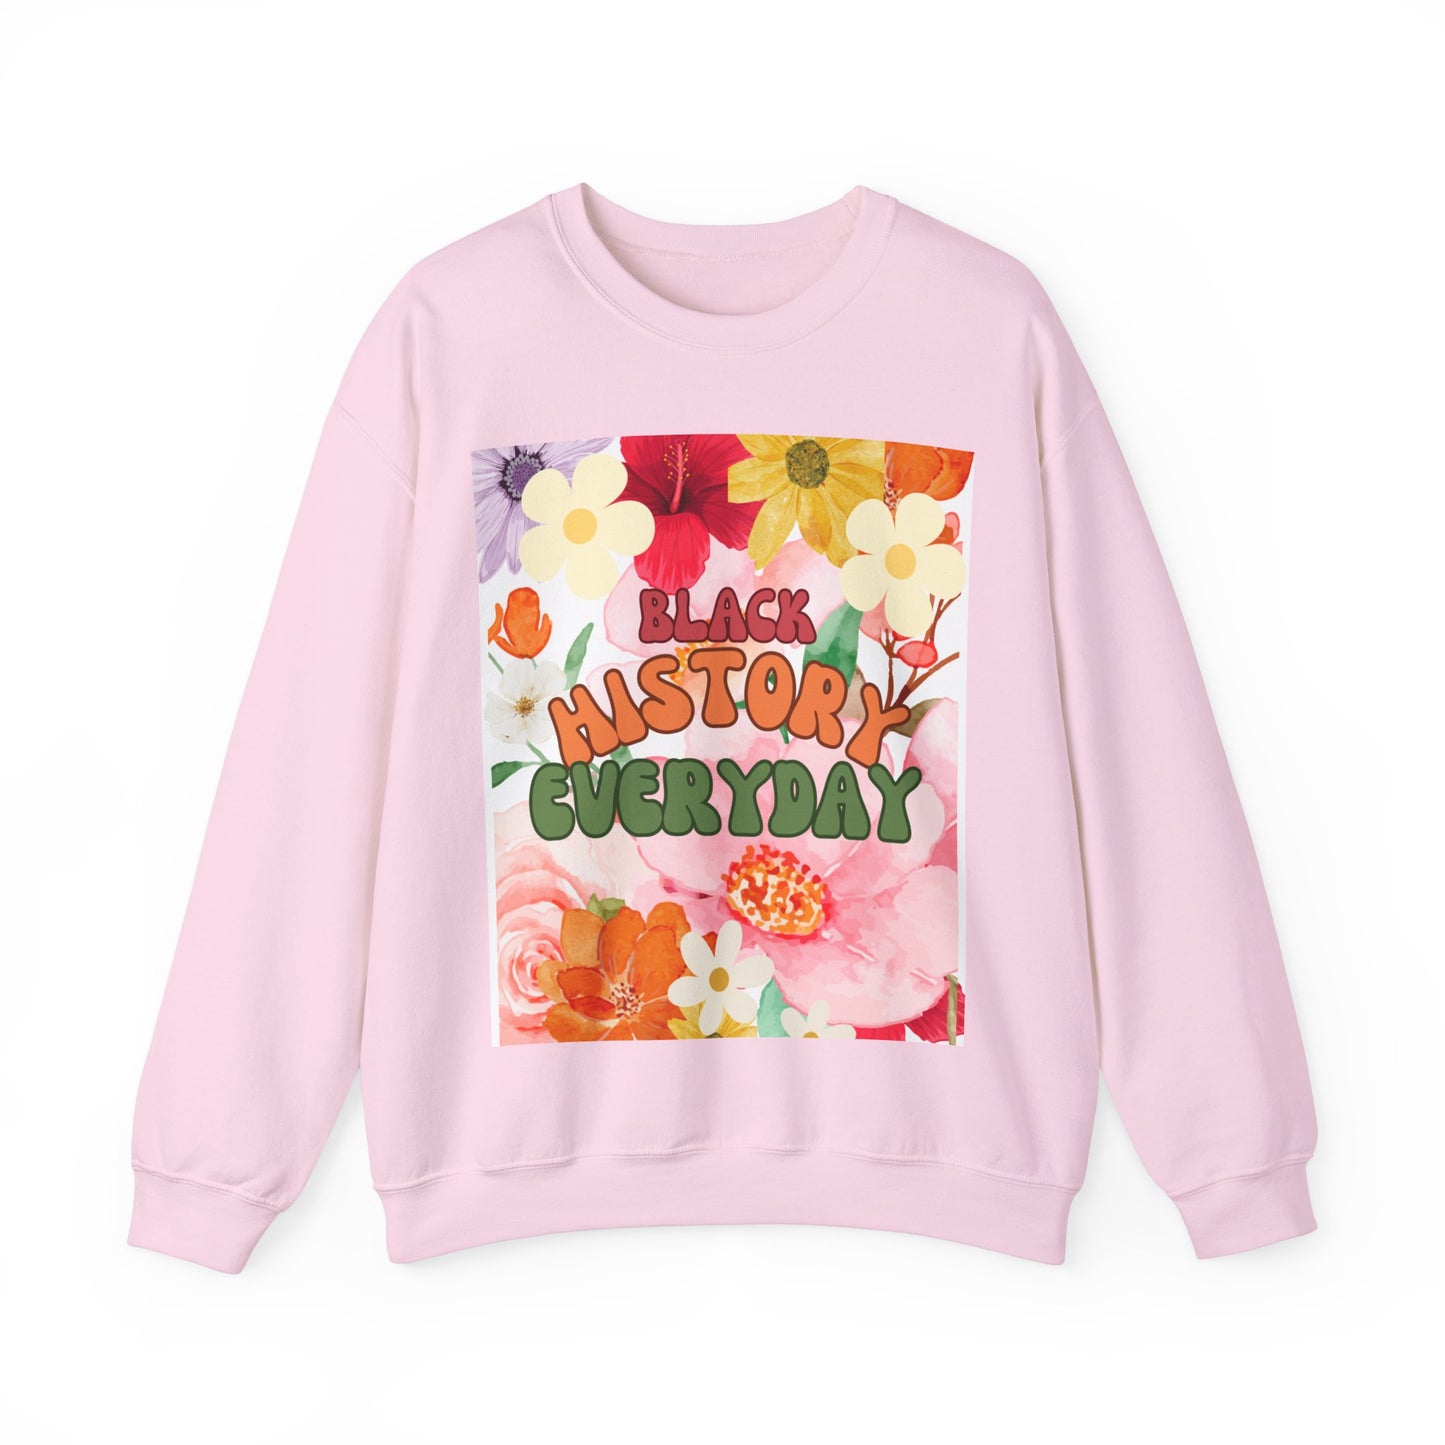 Retro Floral Black History Sweatshirt